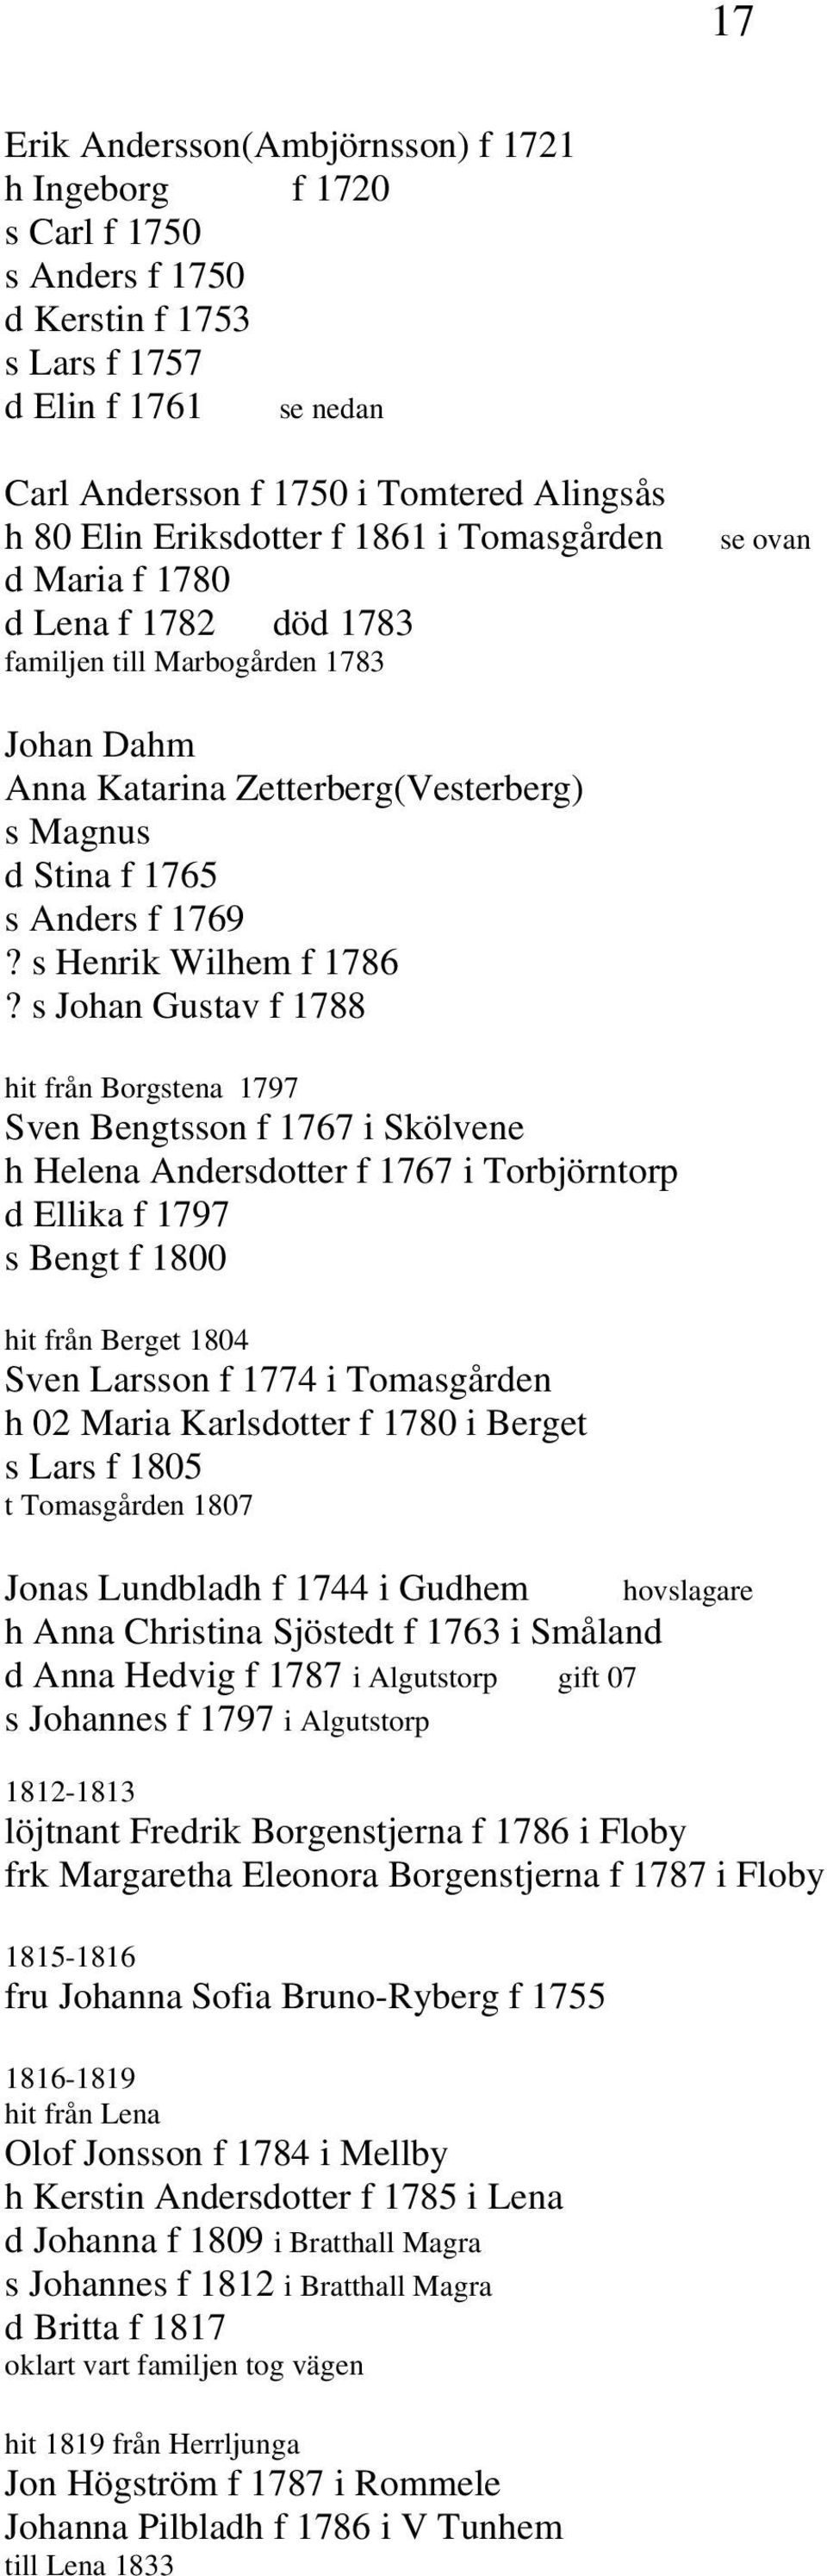 s Henrik Wilhem f 1786?